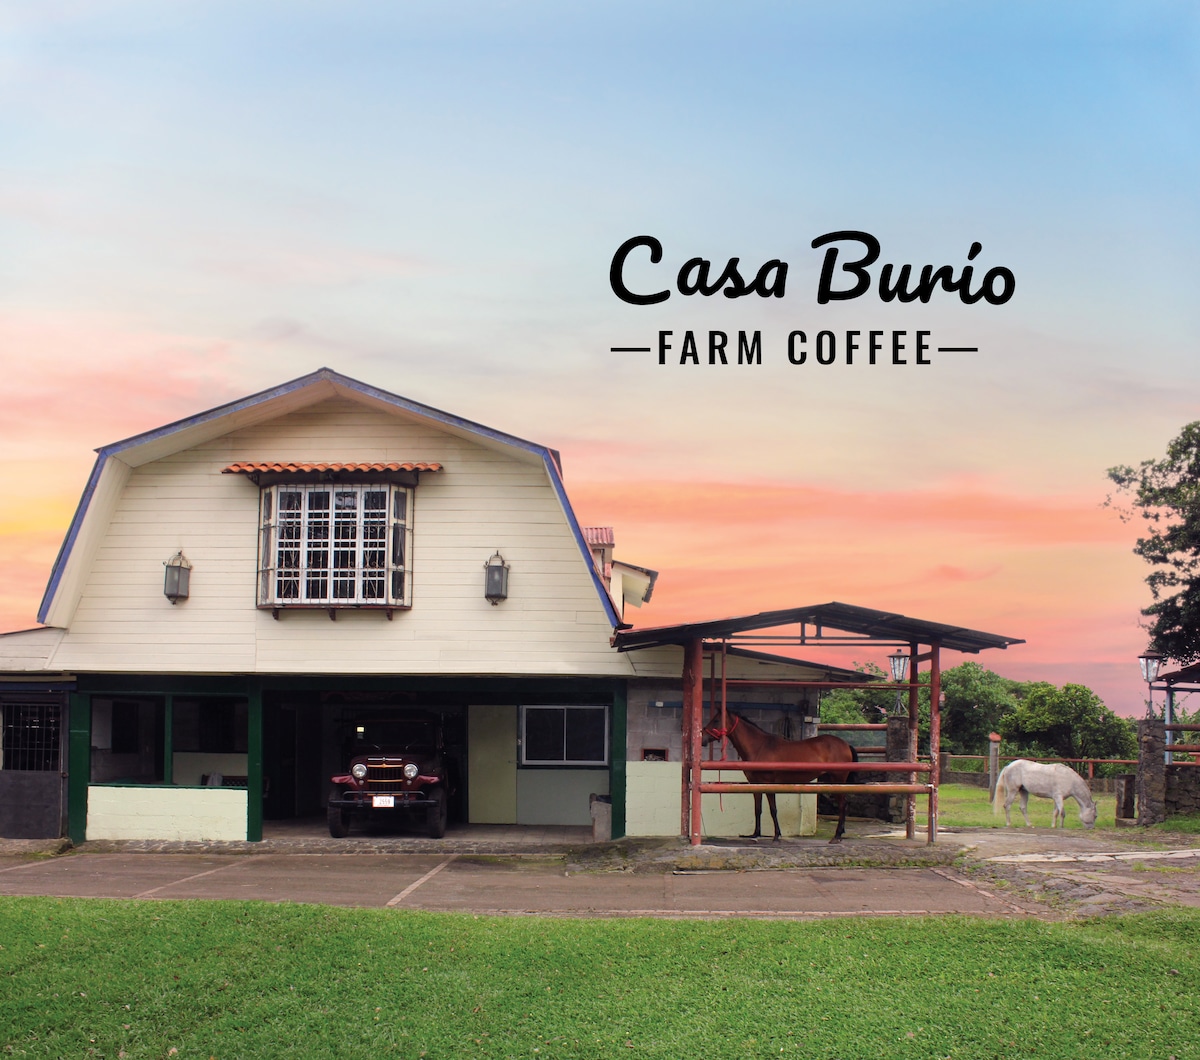 Burio的房子，美丽的小木屋，咖啡和大自然